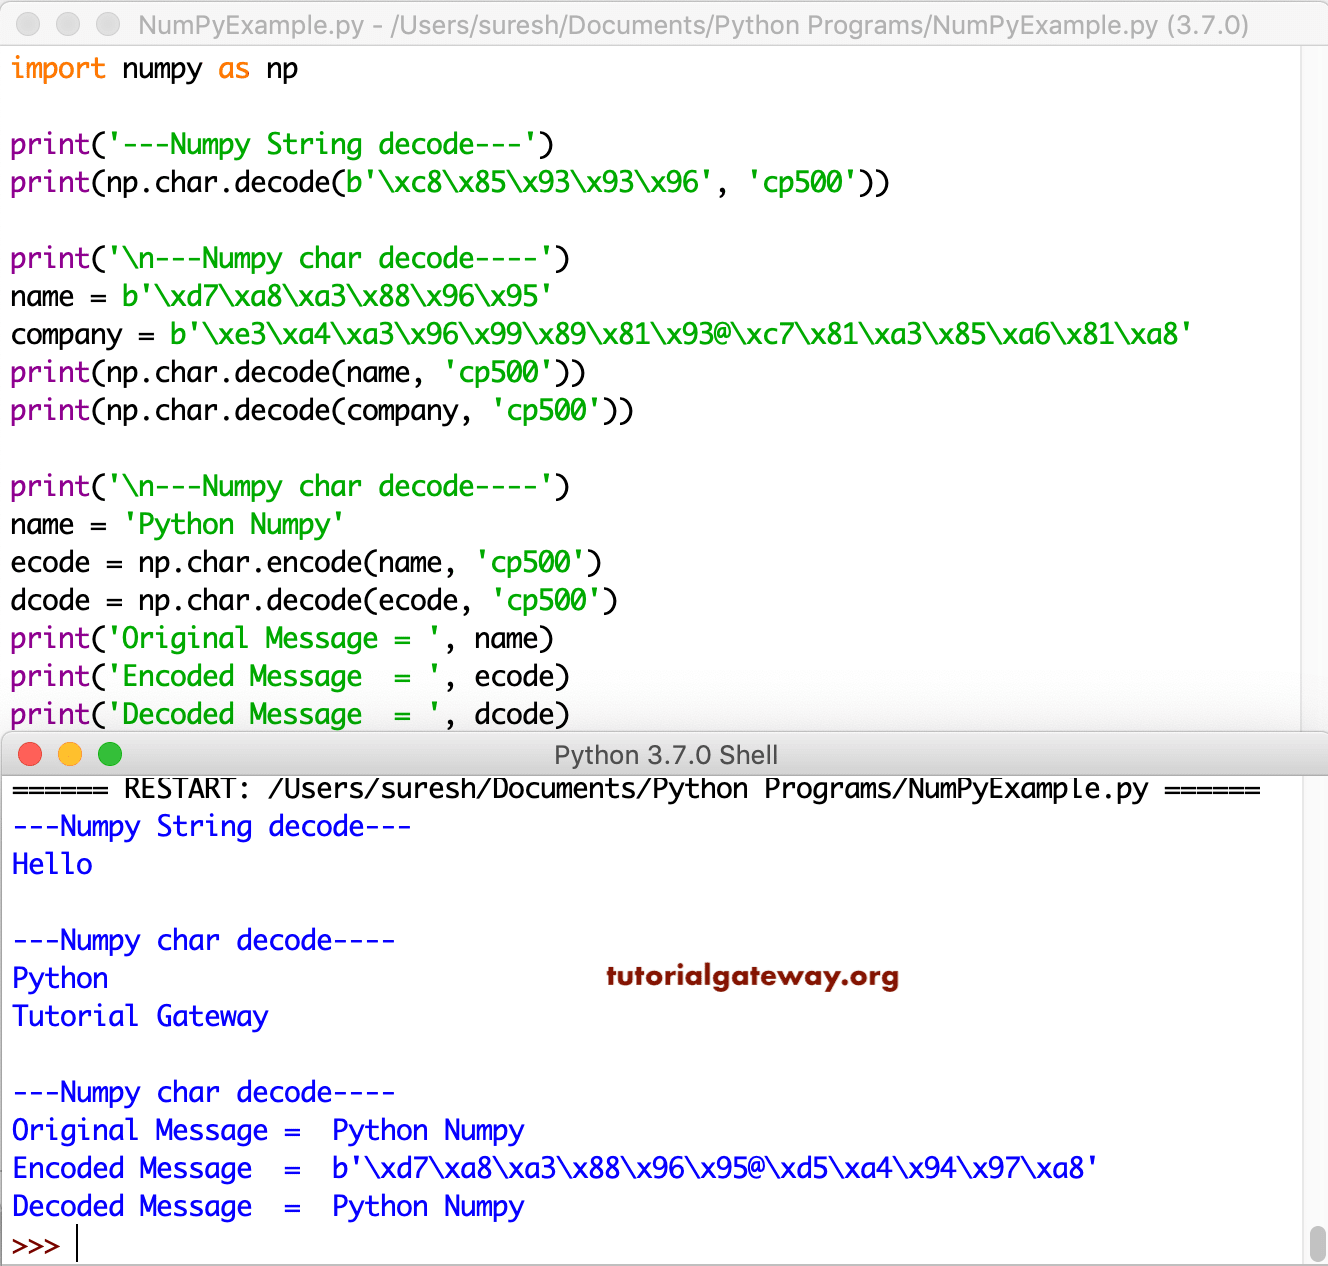 python base64 decode function